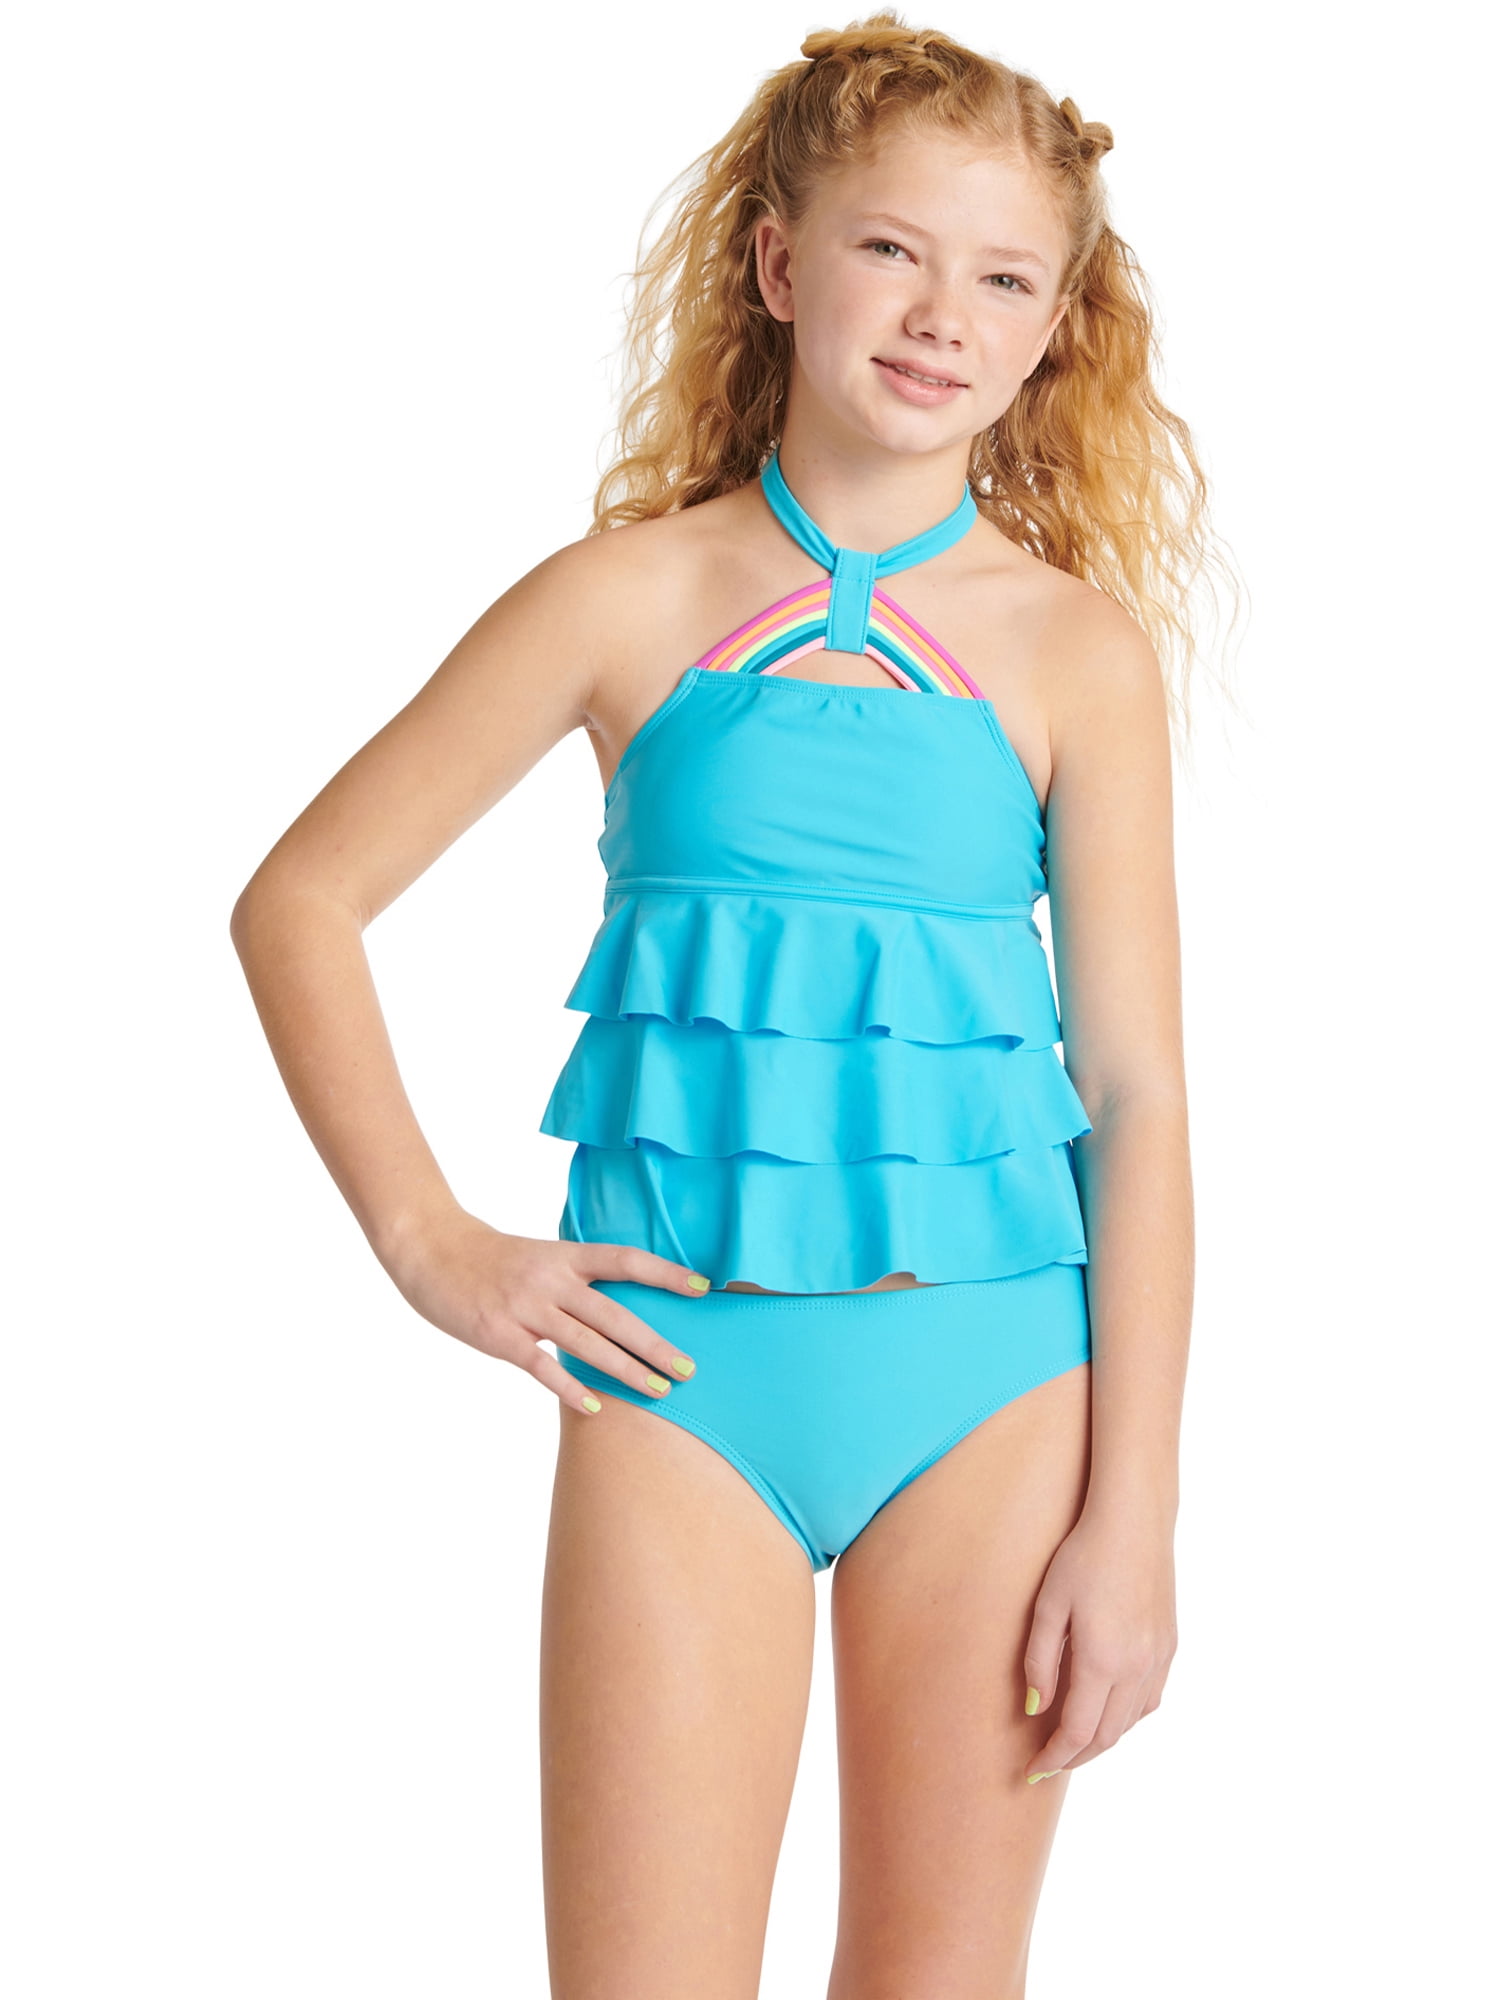 Gymboree Girls Swim Shop Blue Tie Dye Ruffle 2 Piece Nwt Swimsuit 5t 